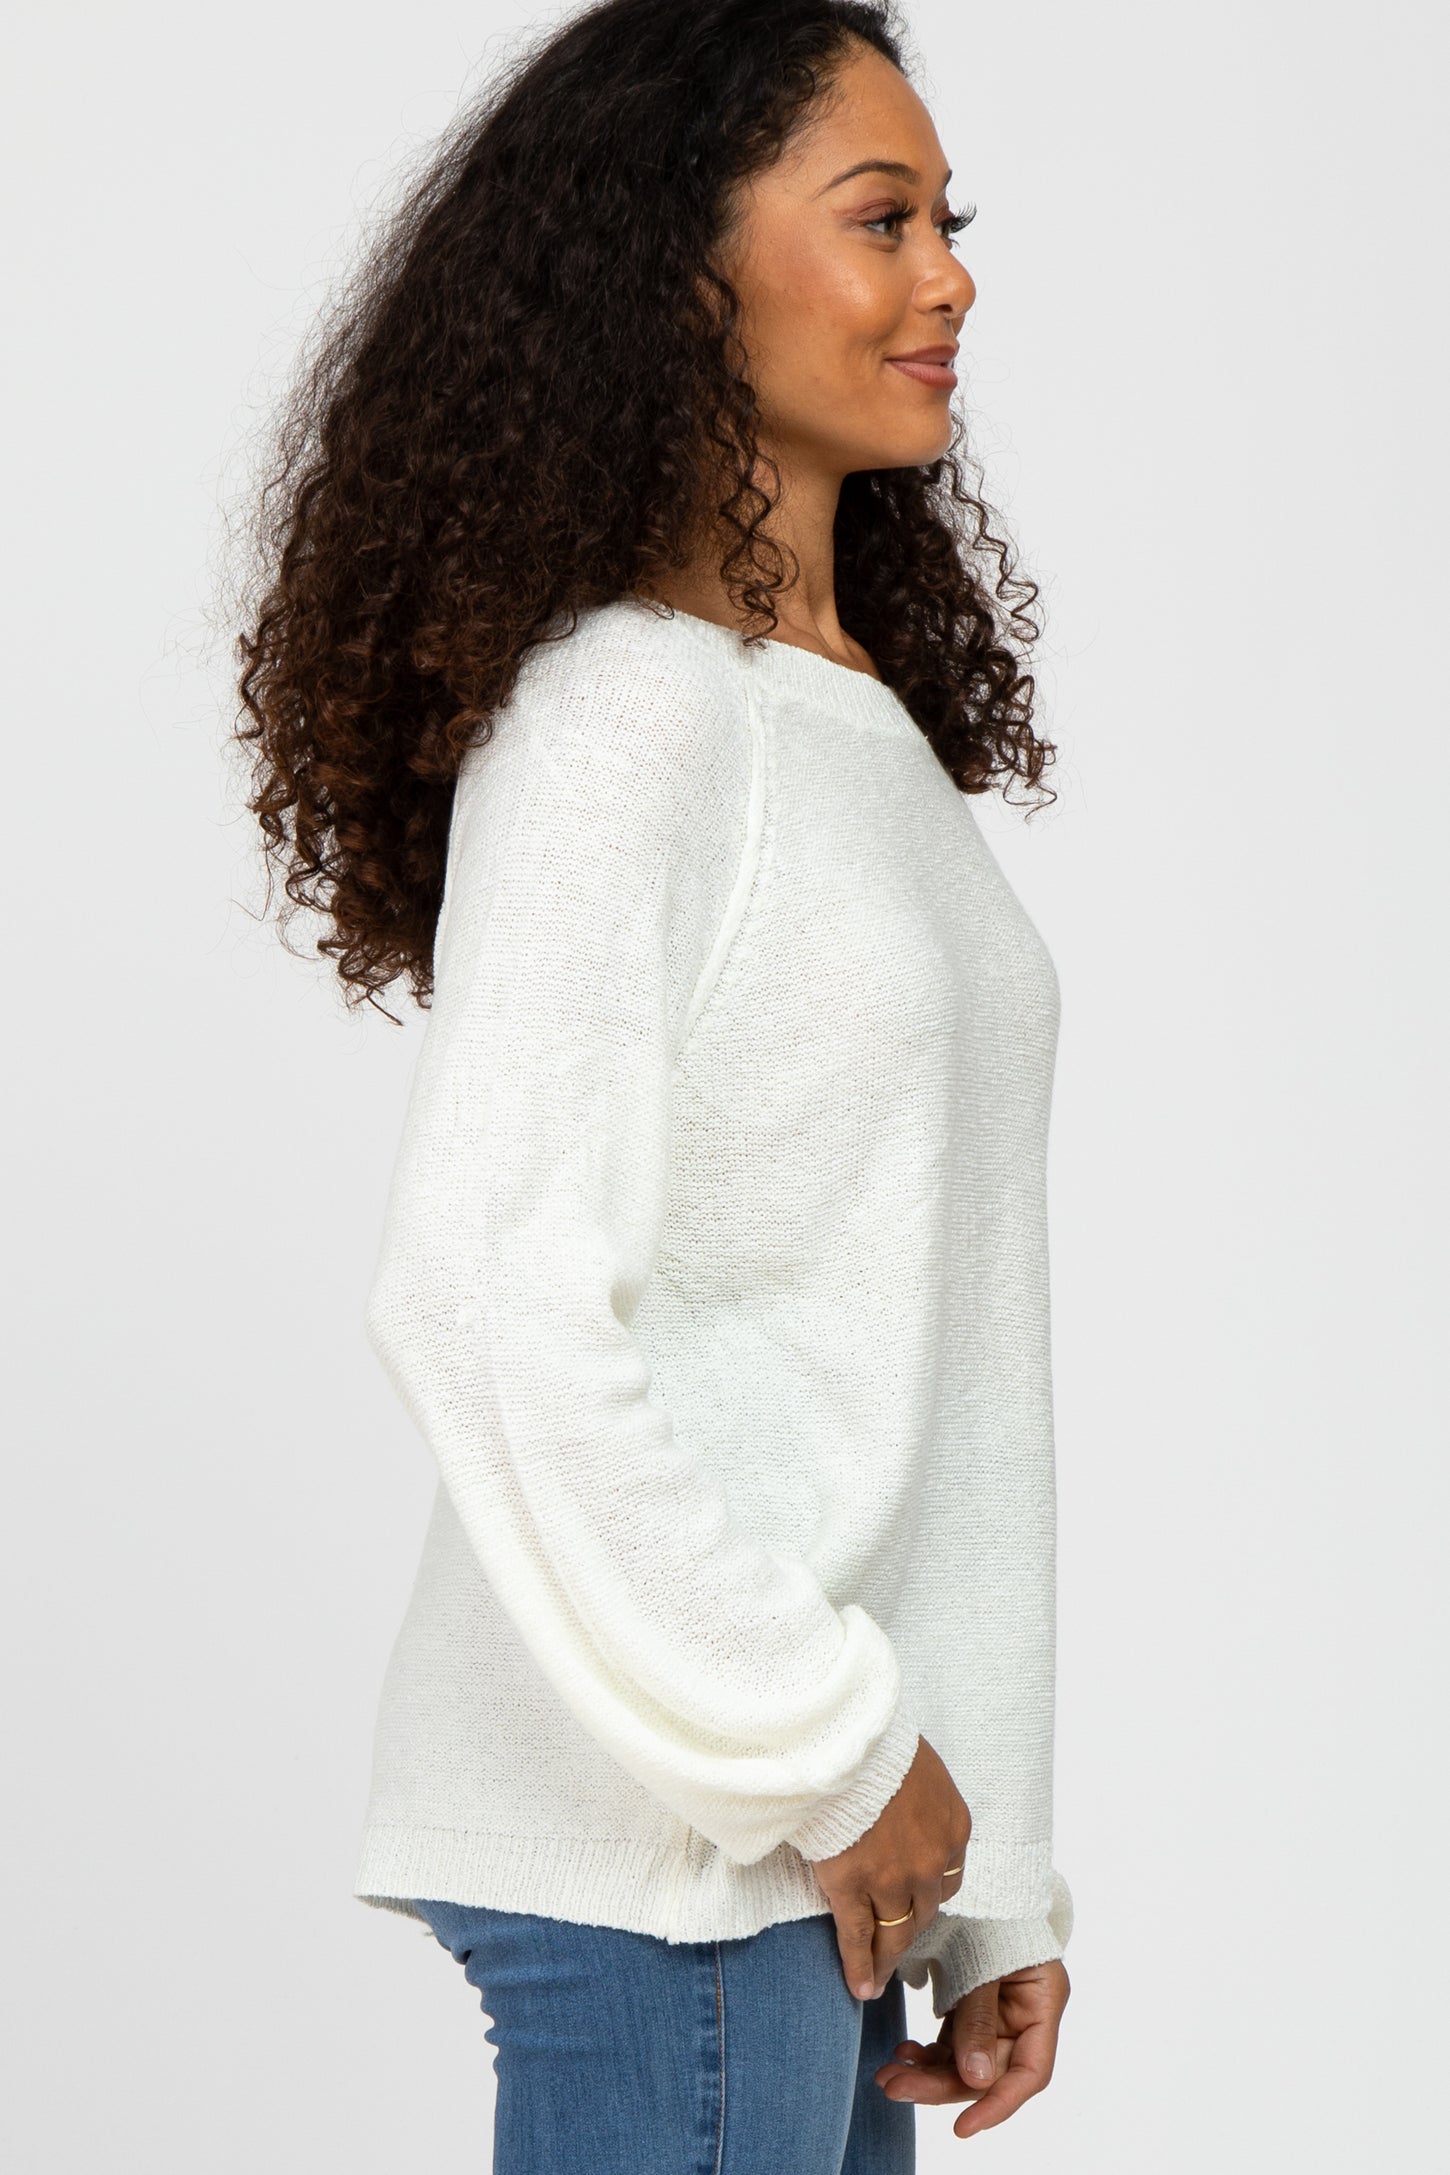 Ivory Knit Lightweight Sweater